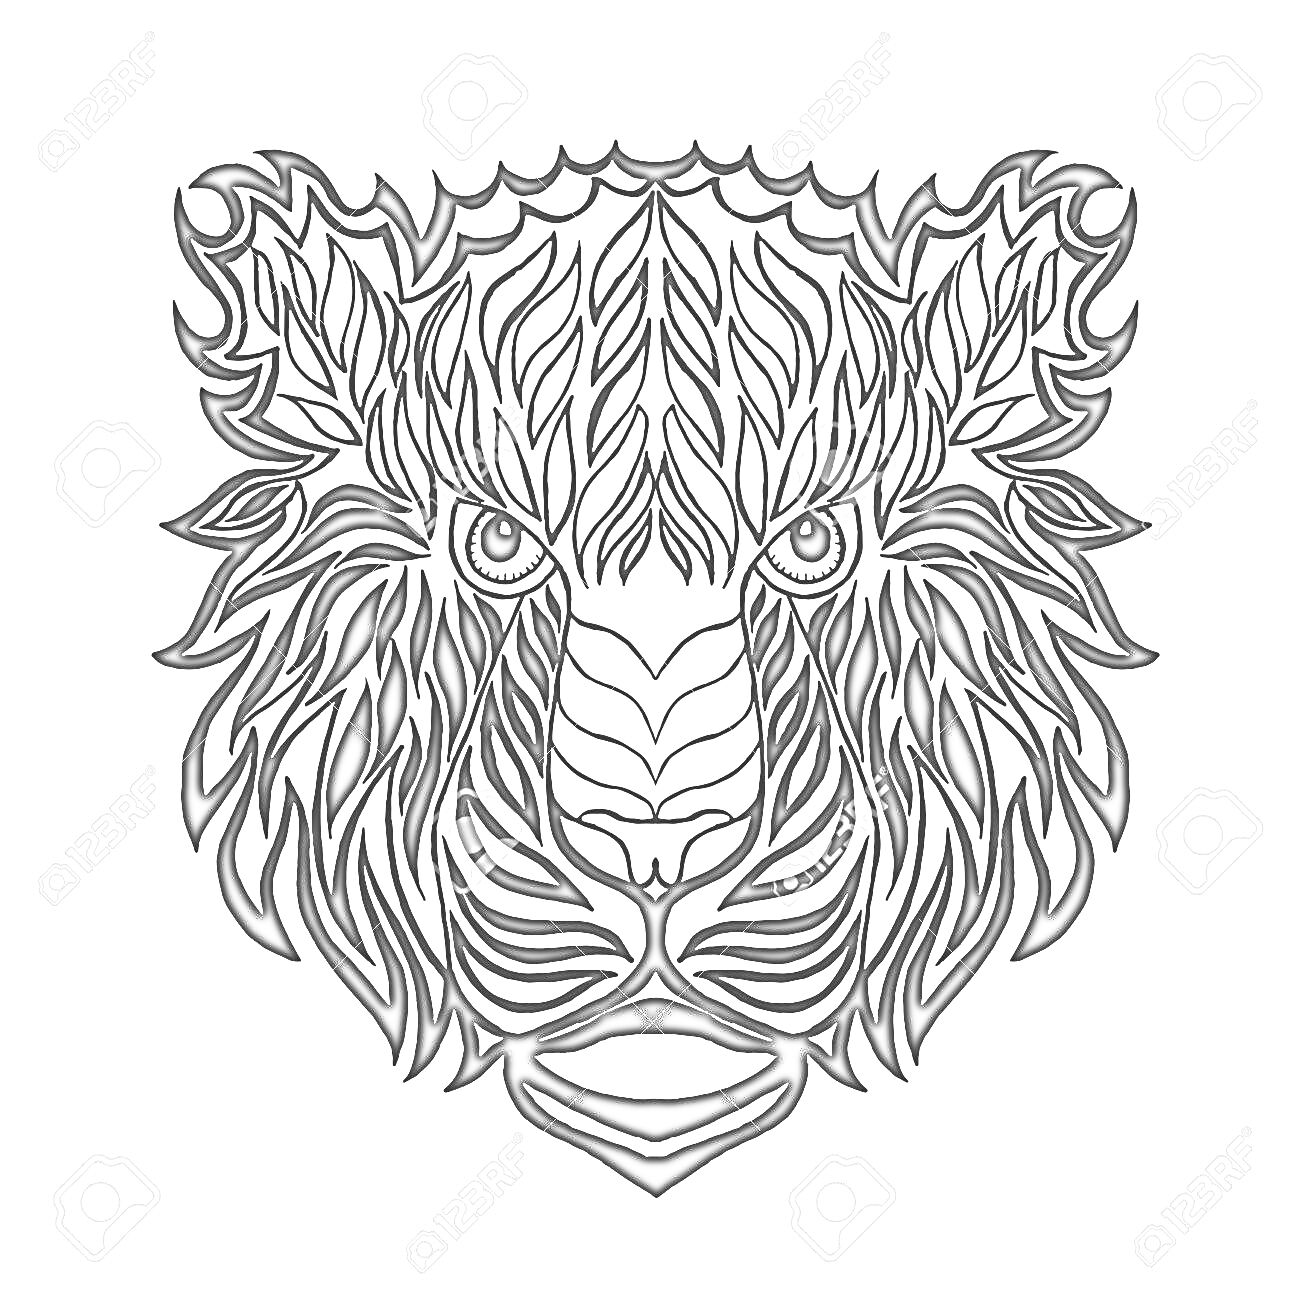 Раскраска Антистресс раскраска - голова тигра с абстрактными узорами